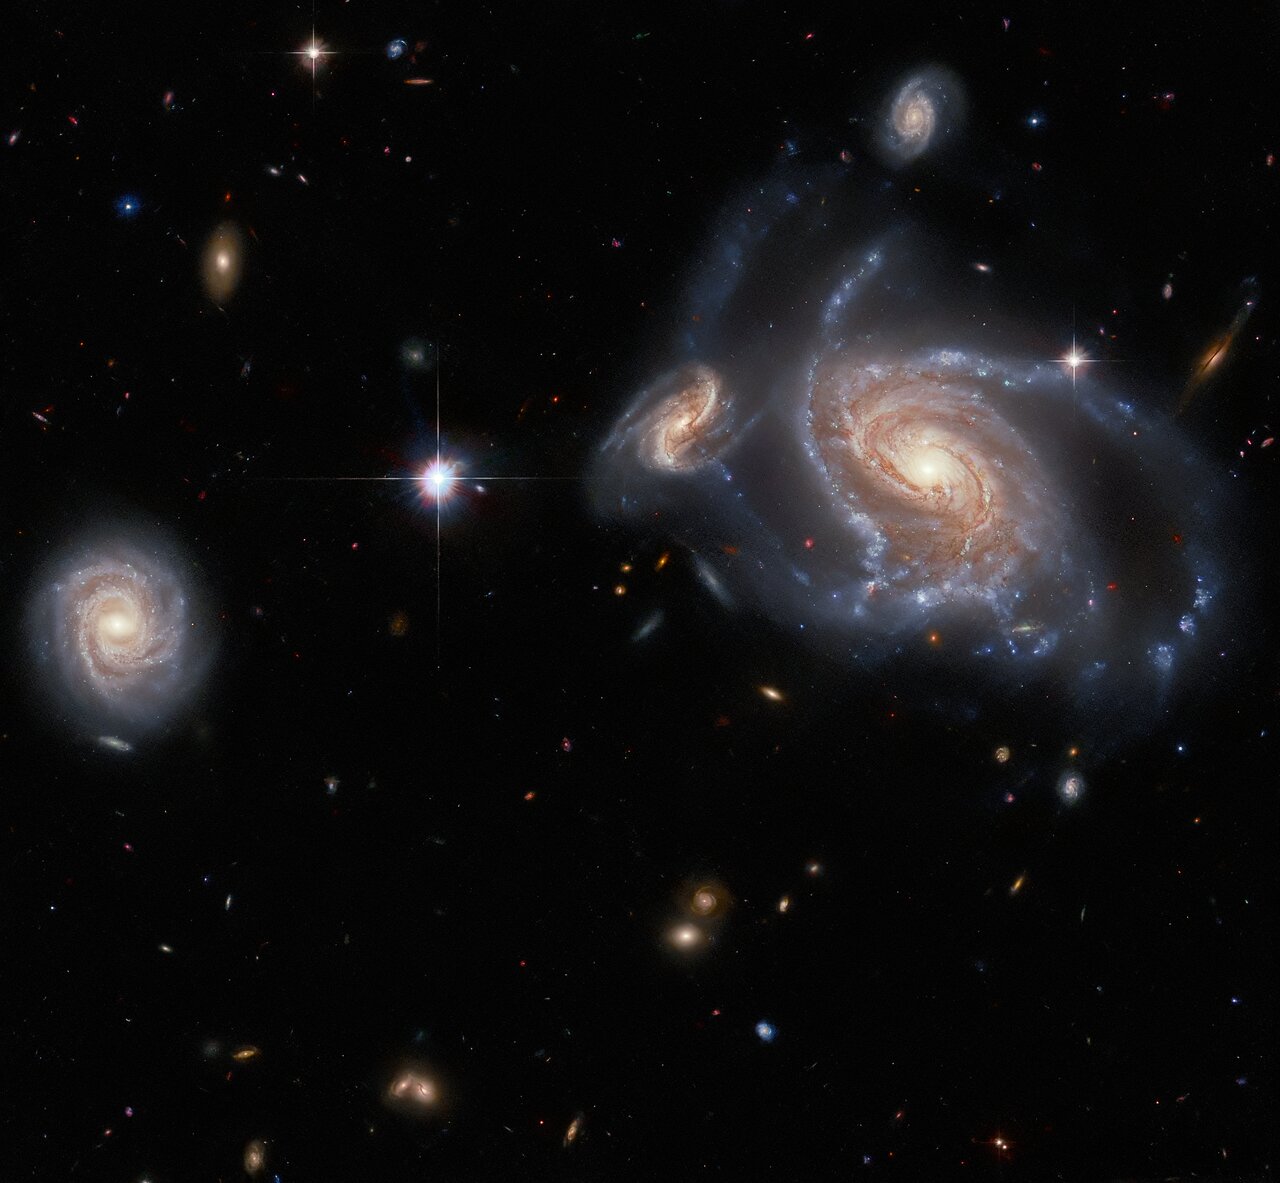 Hubble Views a Vast Galactic Neighborhood